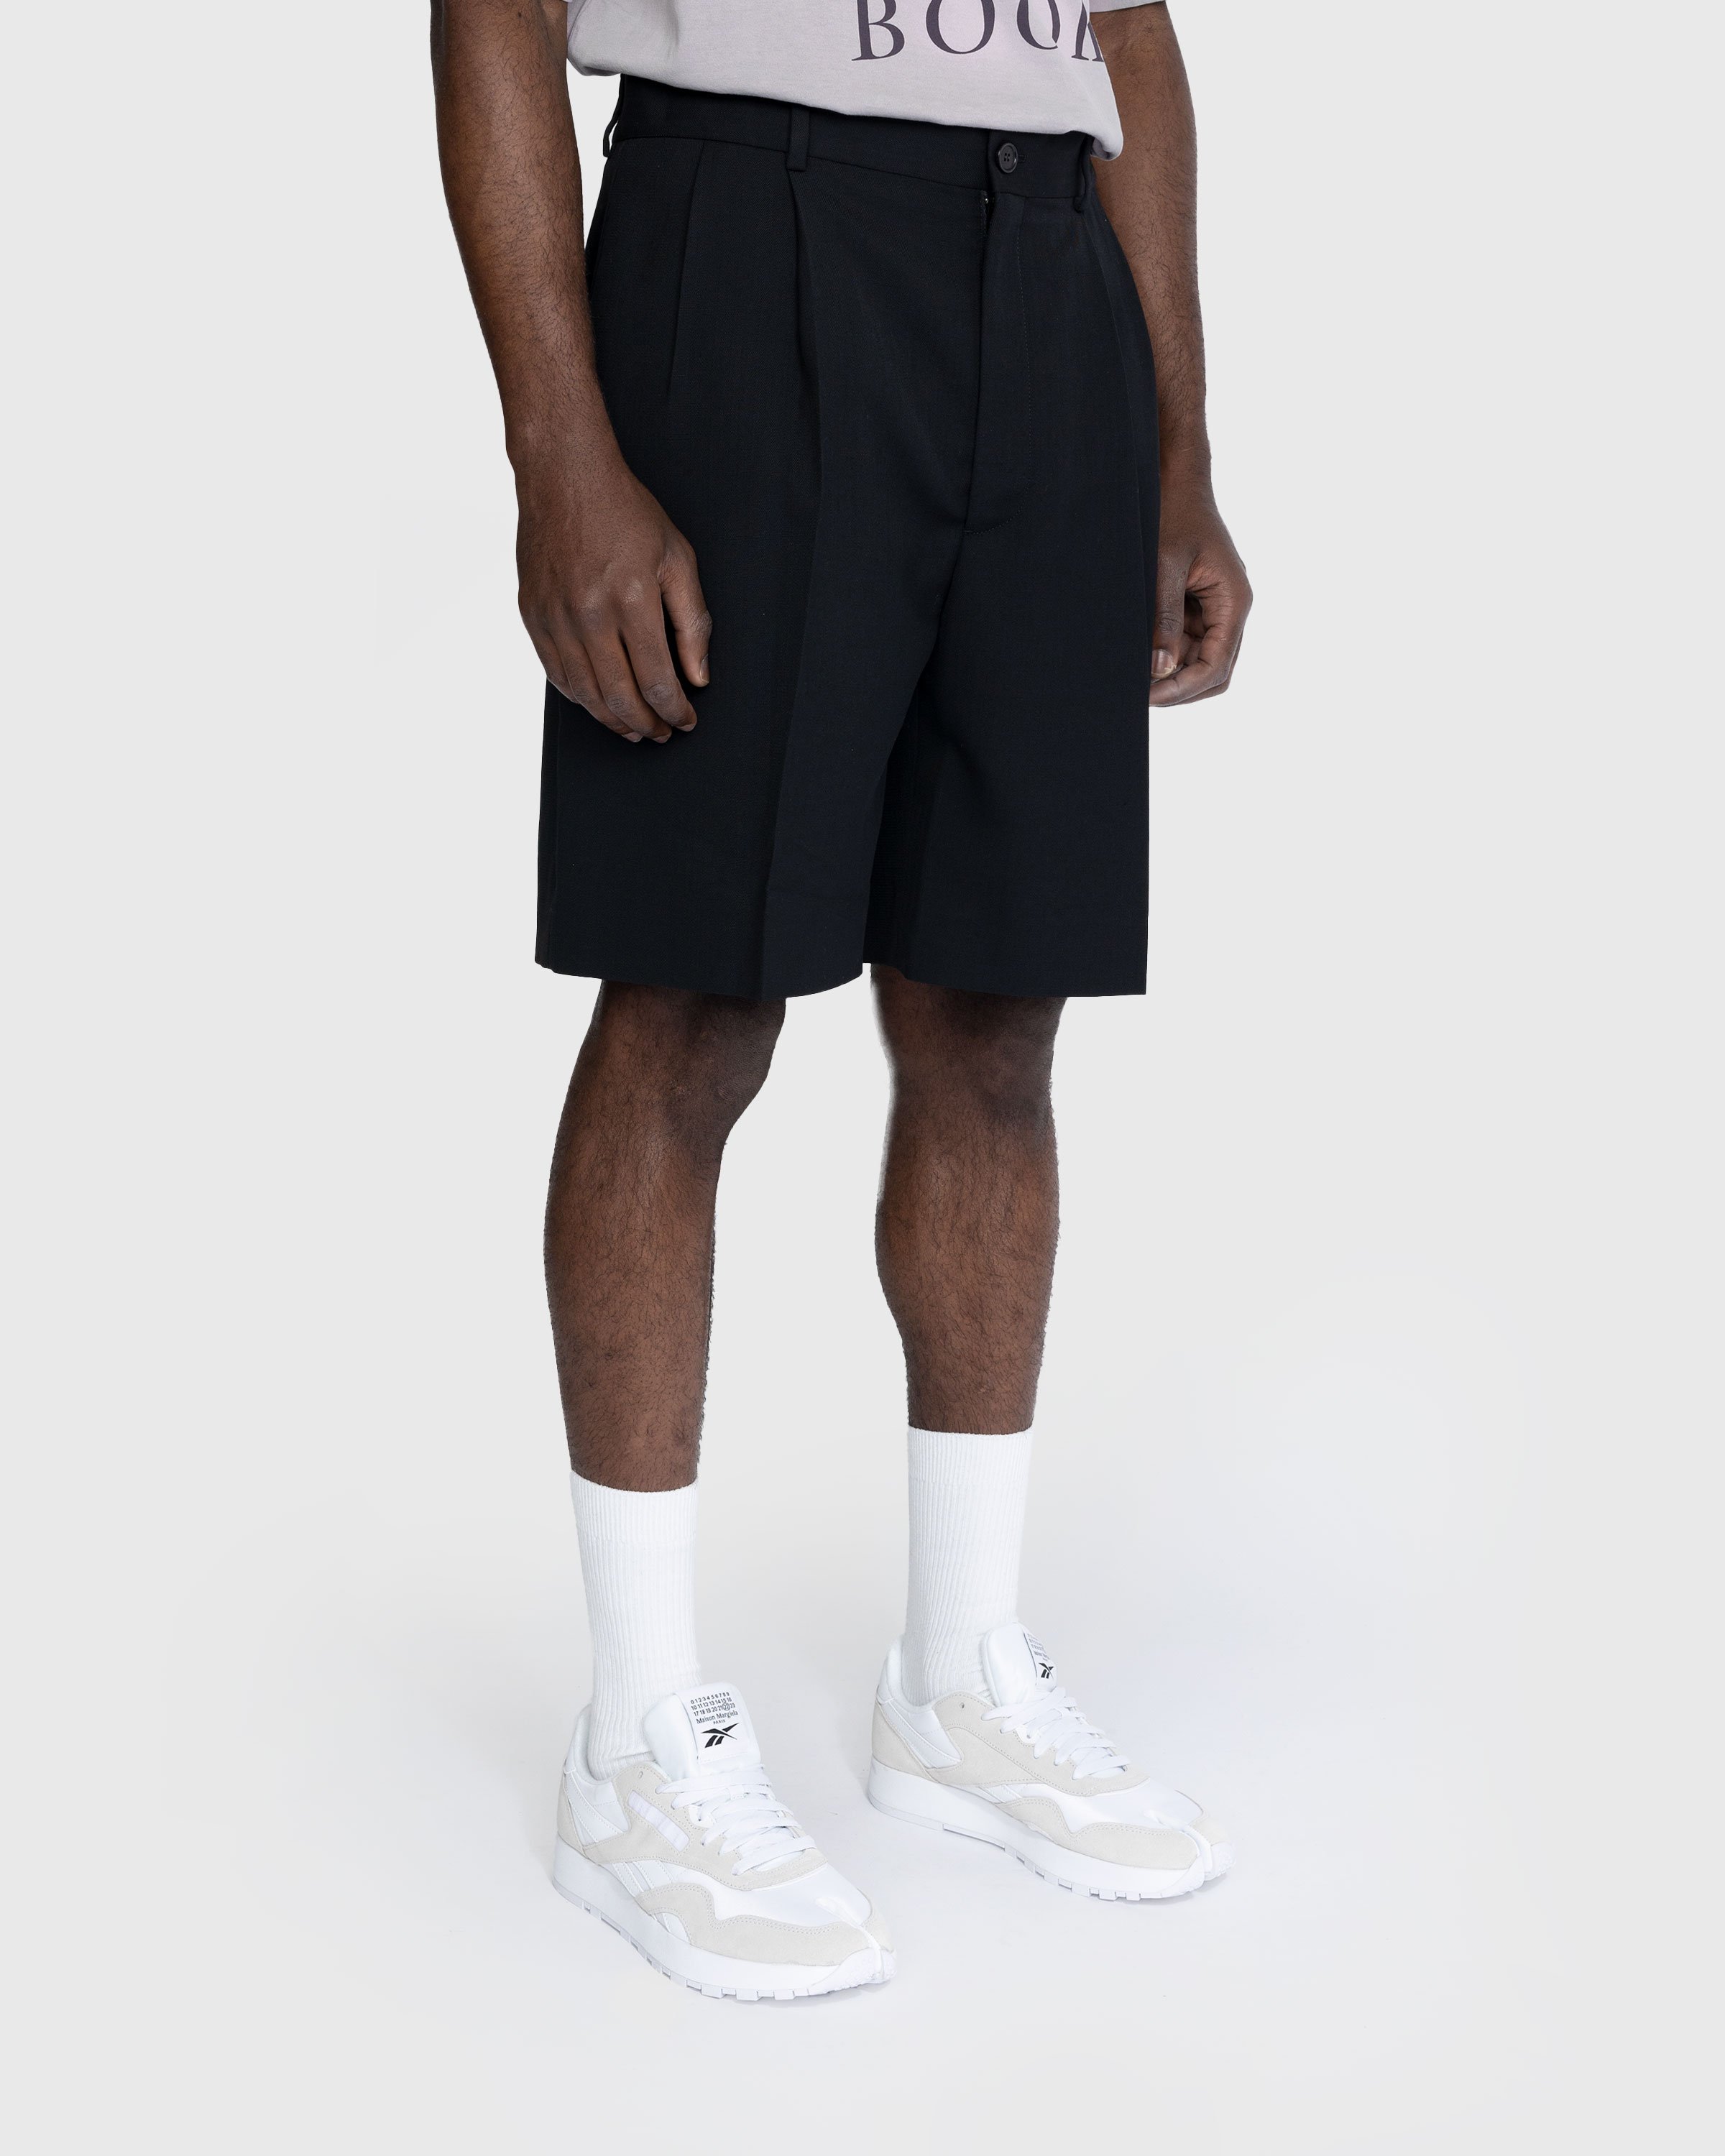 Acne Studios - Tailored Pleated Shorts Black - Clothing - Black - Image 4